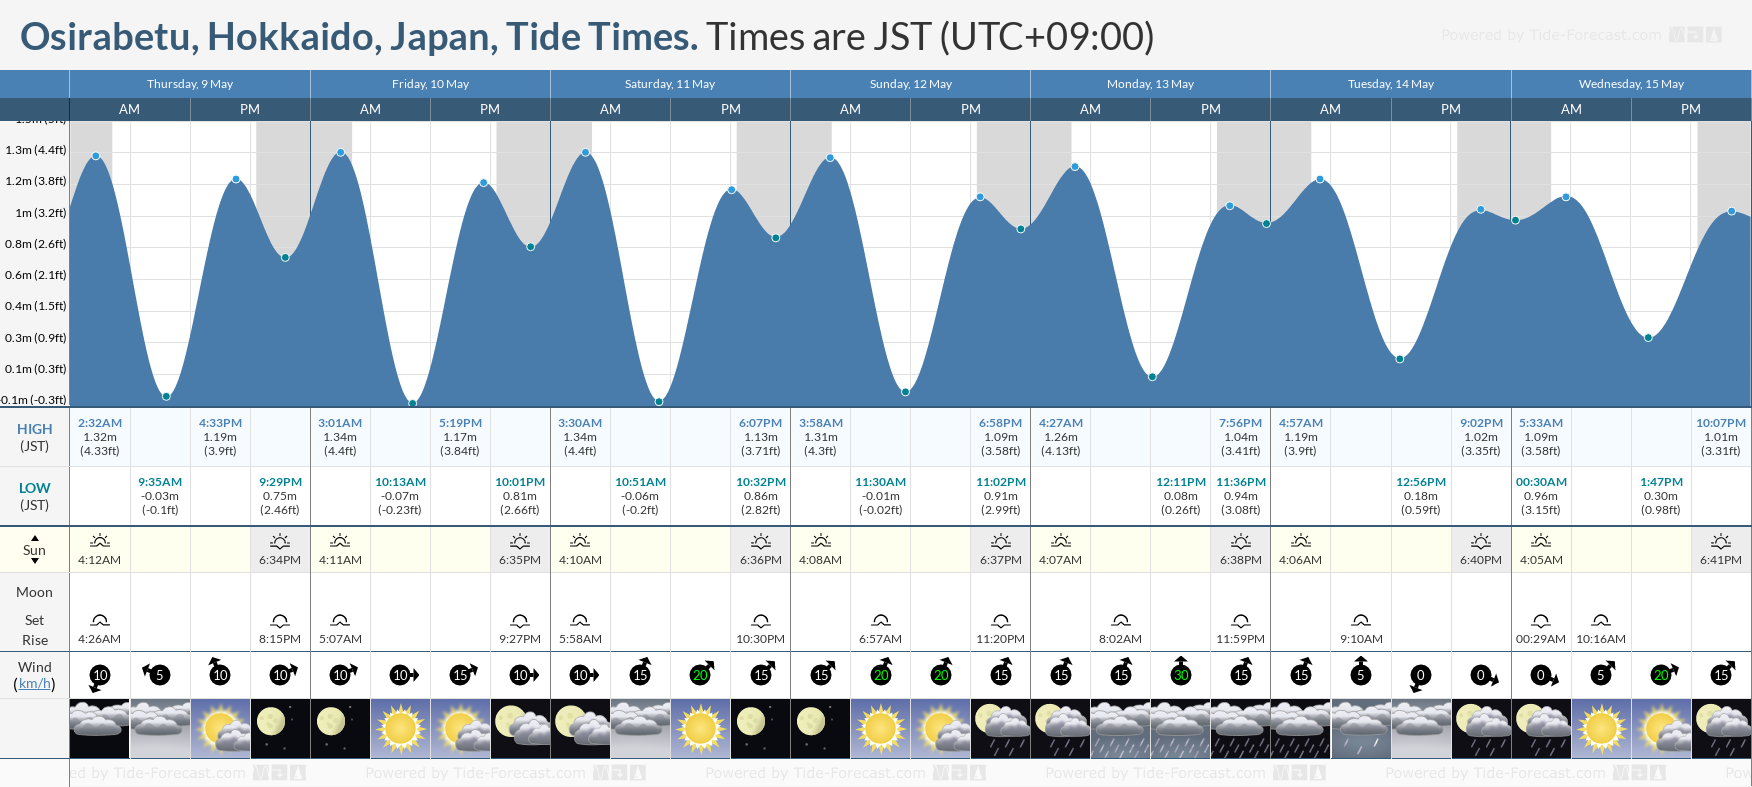 Osirabetu, Hokkaido, Japan Tide Chart including high and low tide tide times for the next 7 days